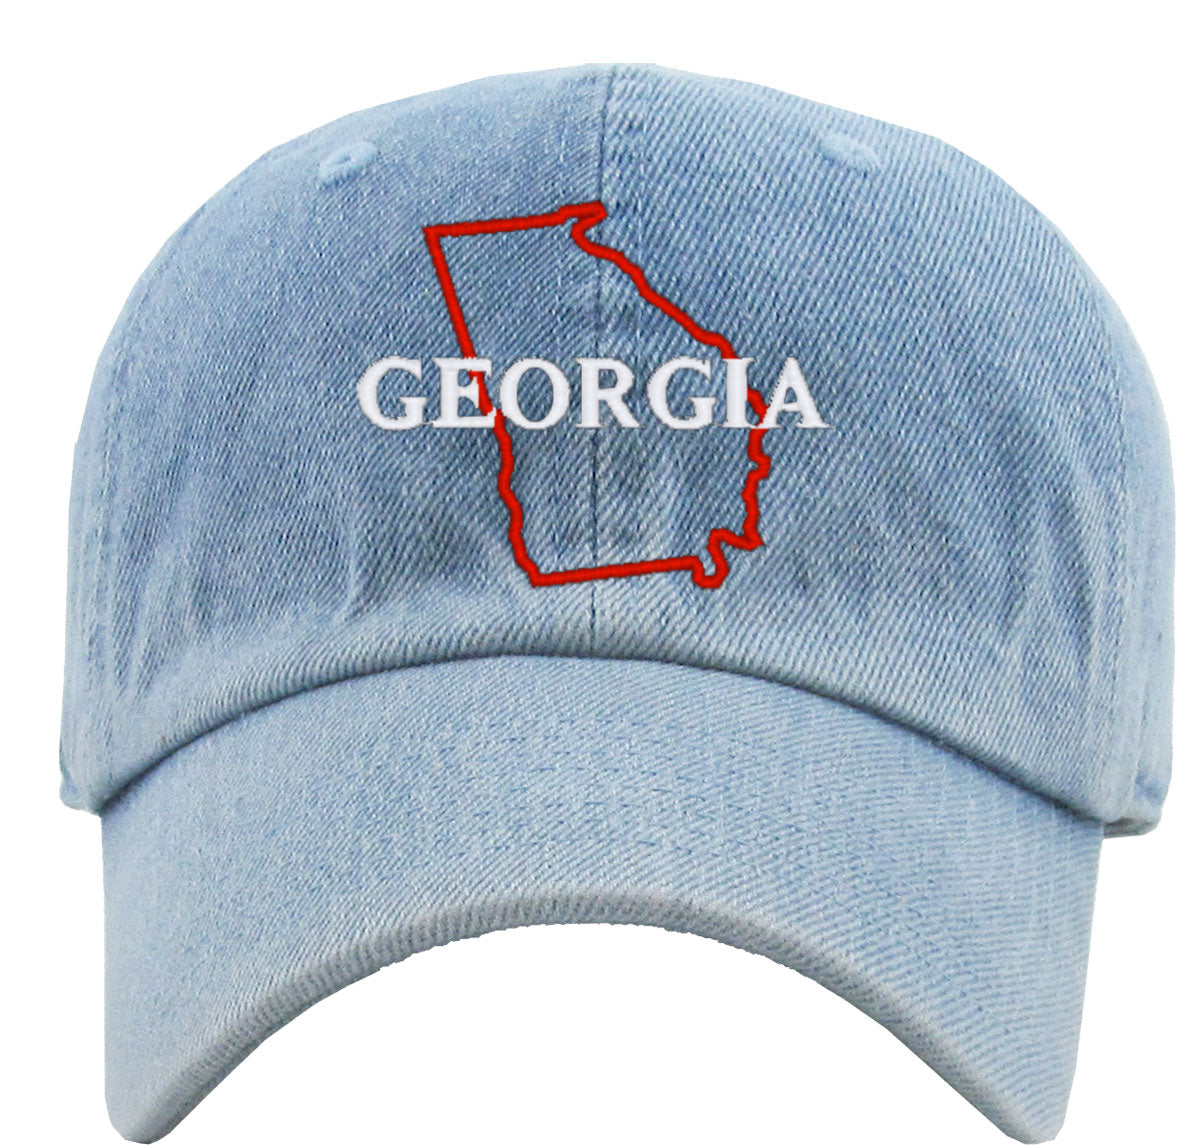 Georgia Premium Baseball Cap